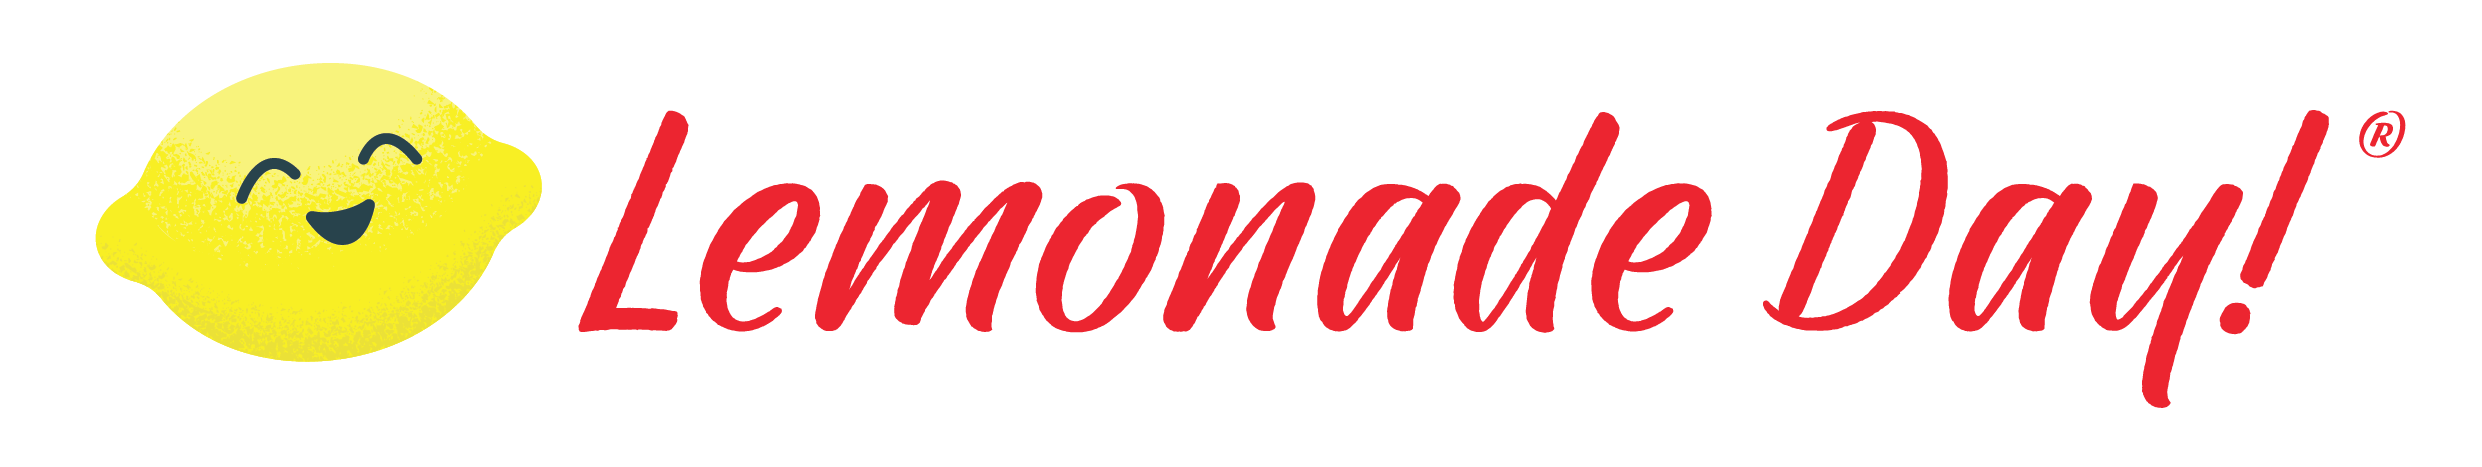 ldn-logo